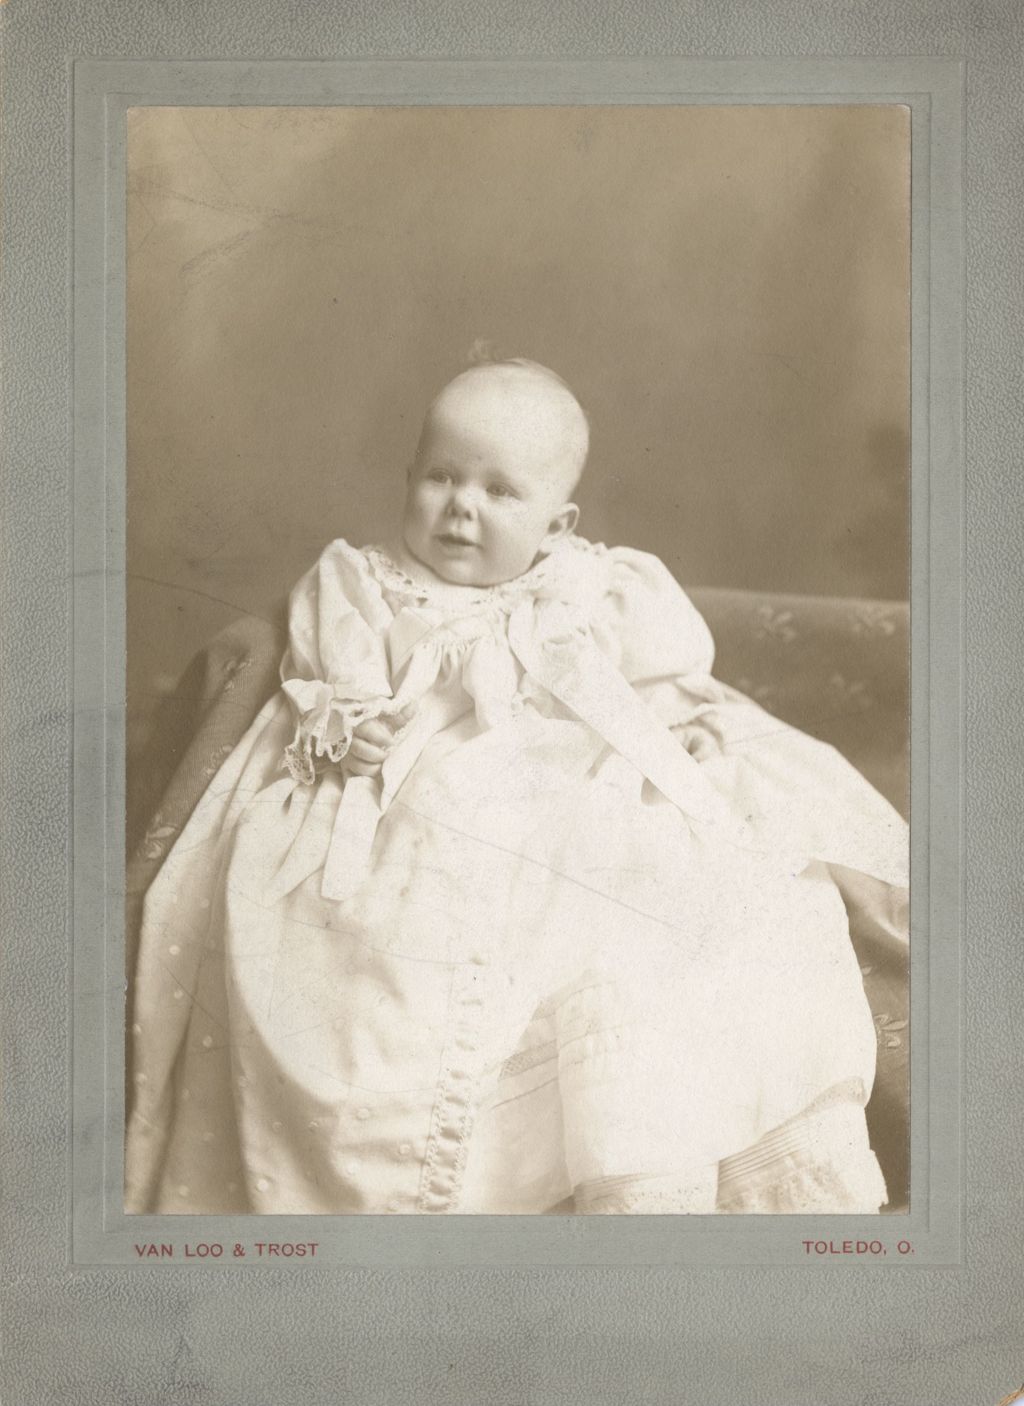 Photographic portrait of baby boy